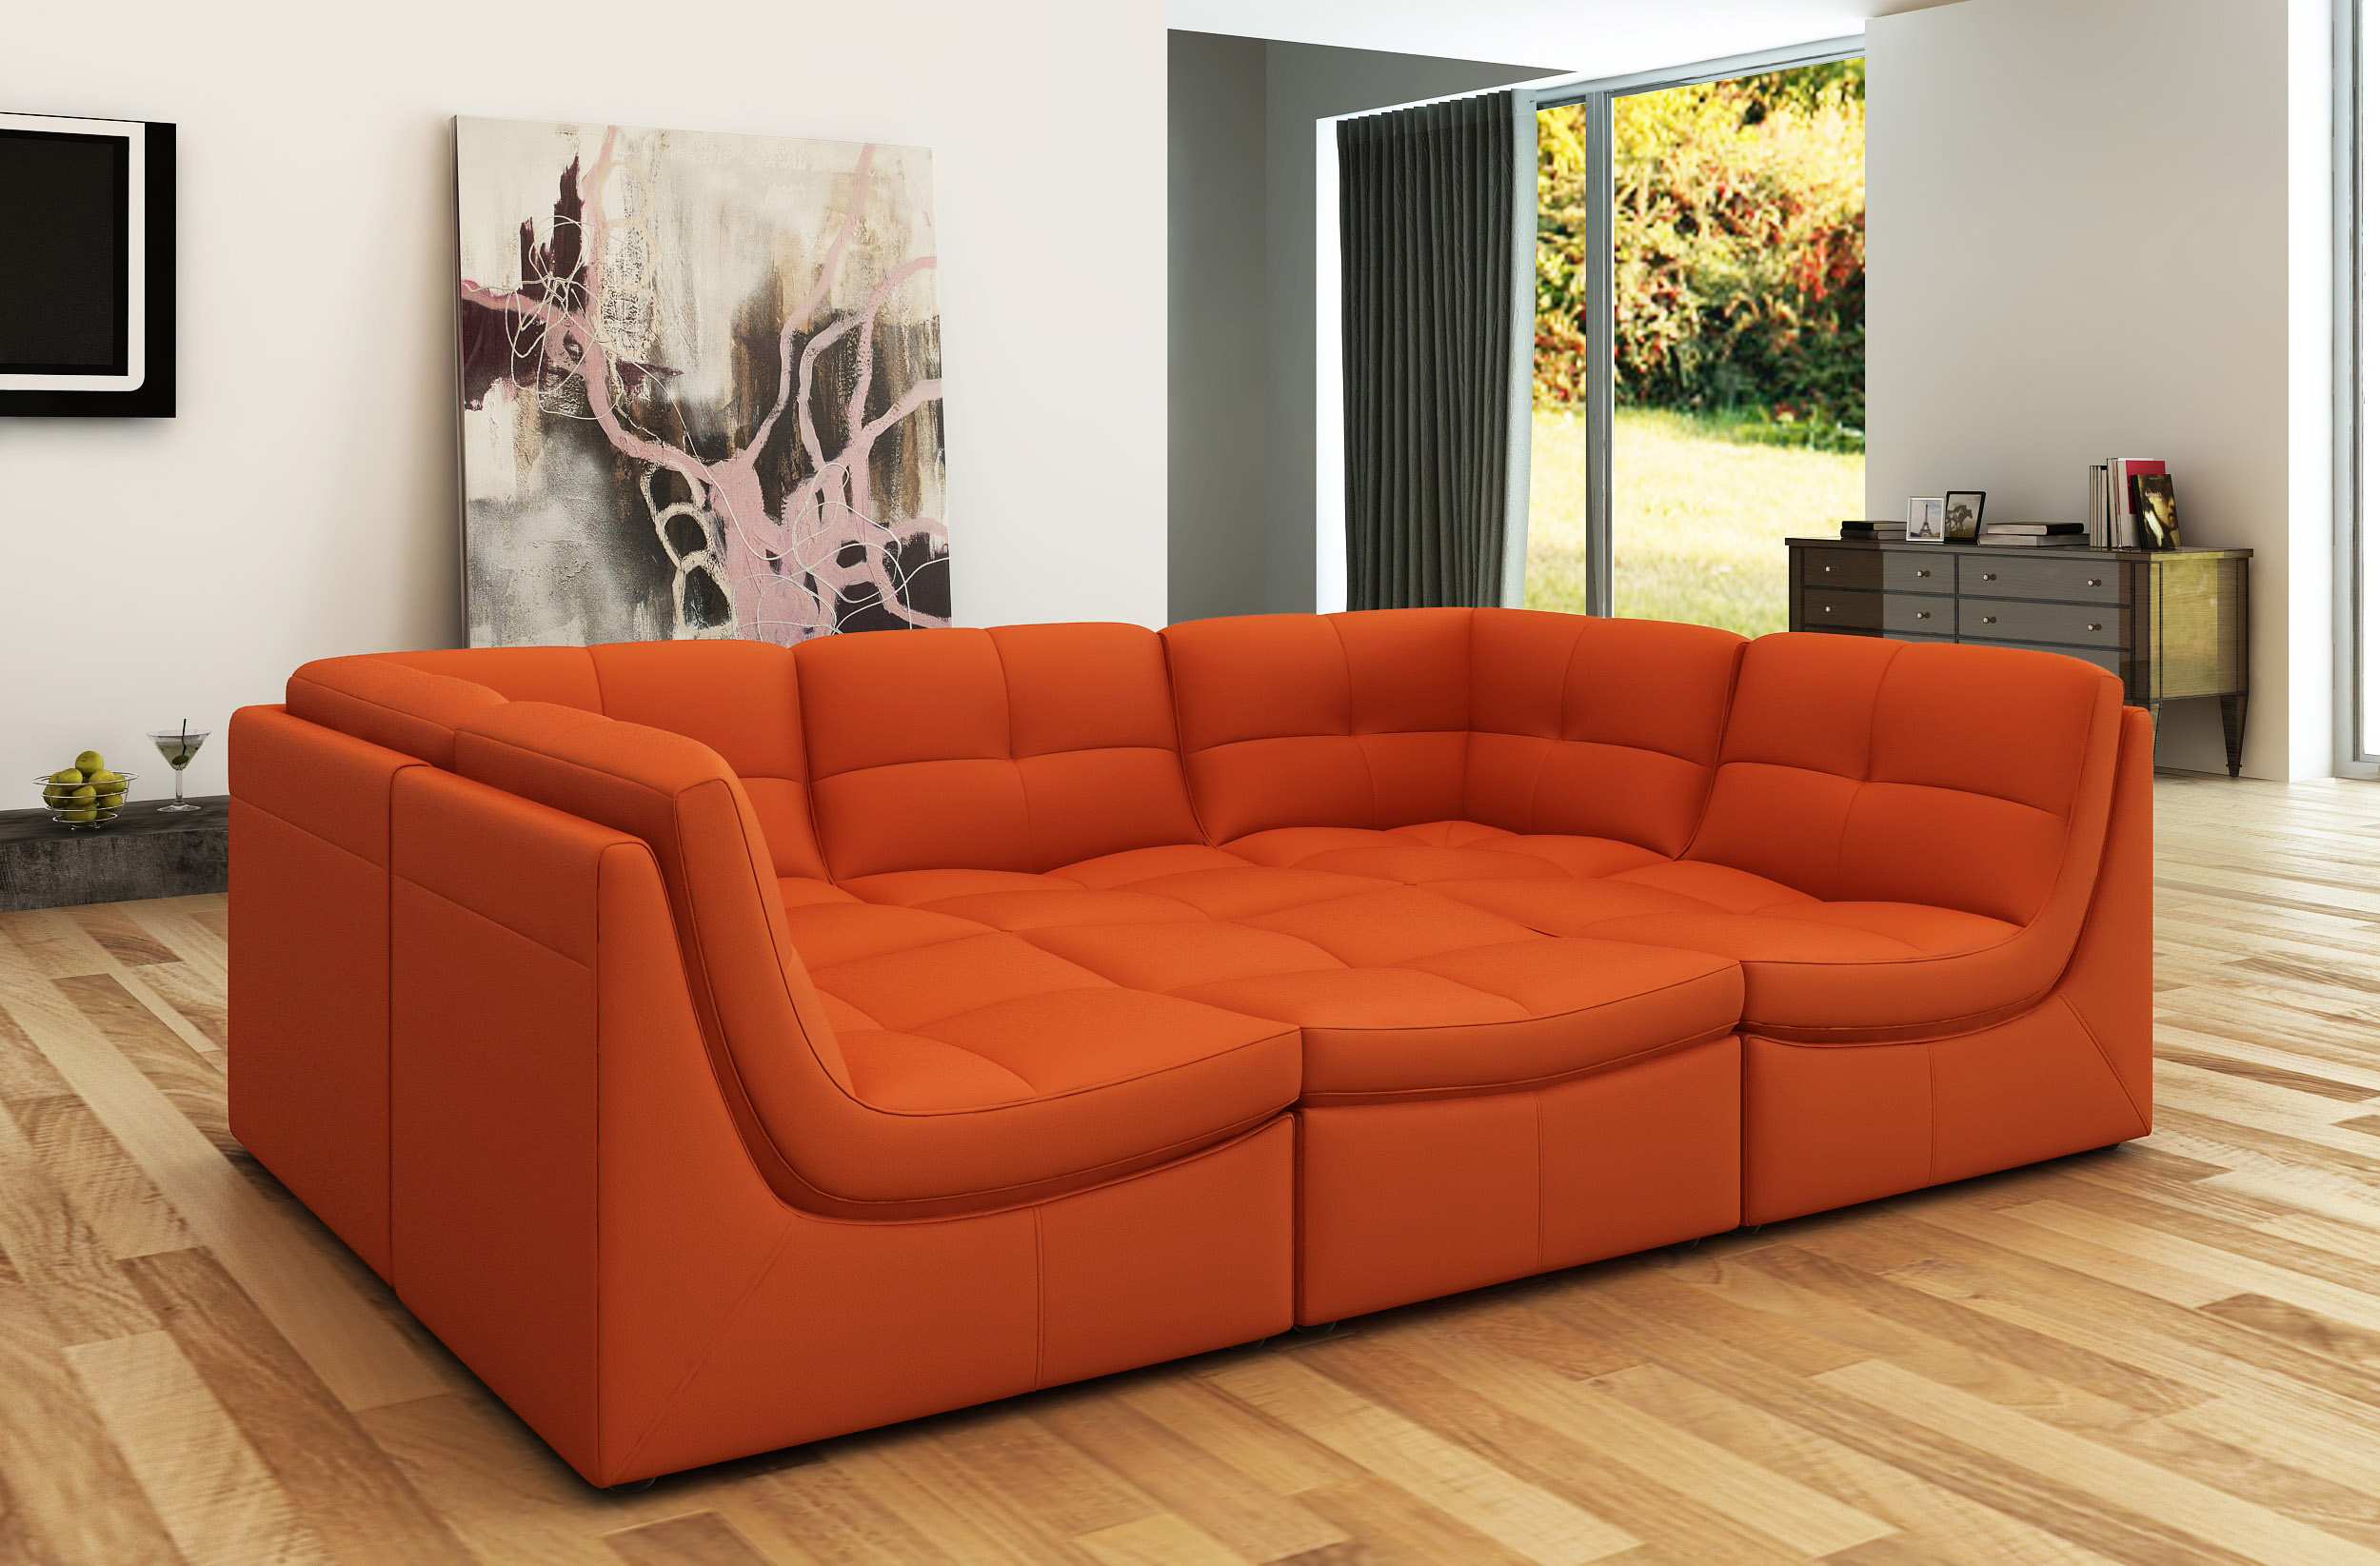 tufted leather corner sofa